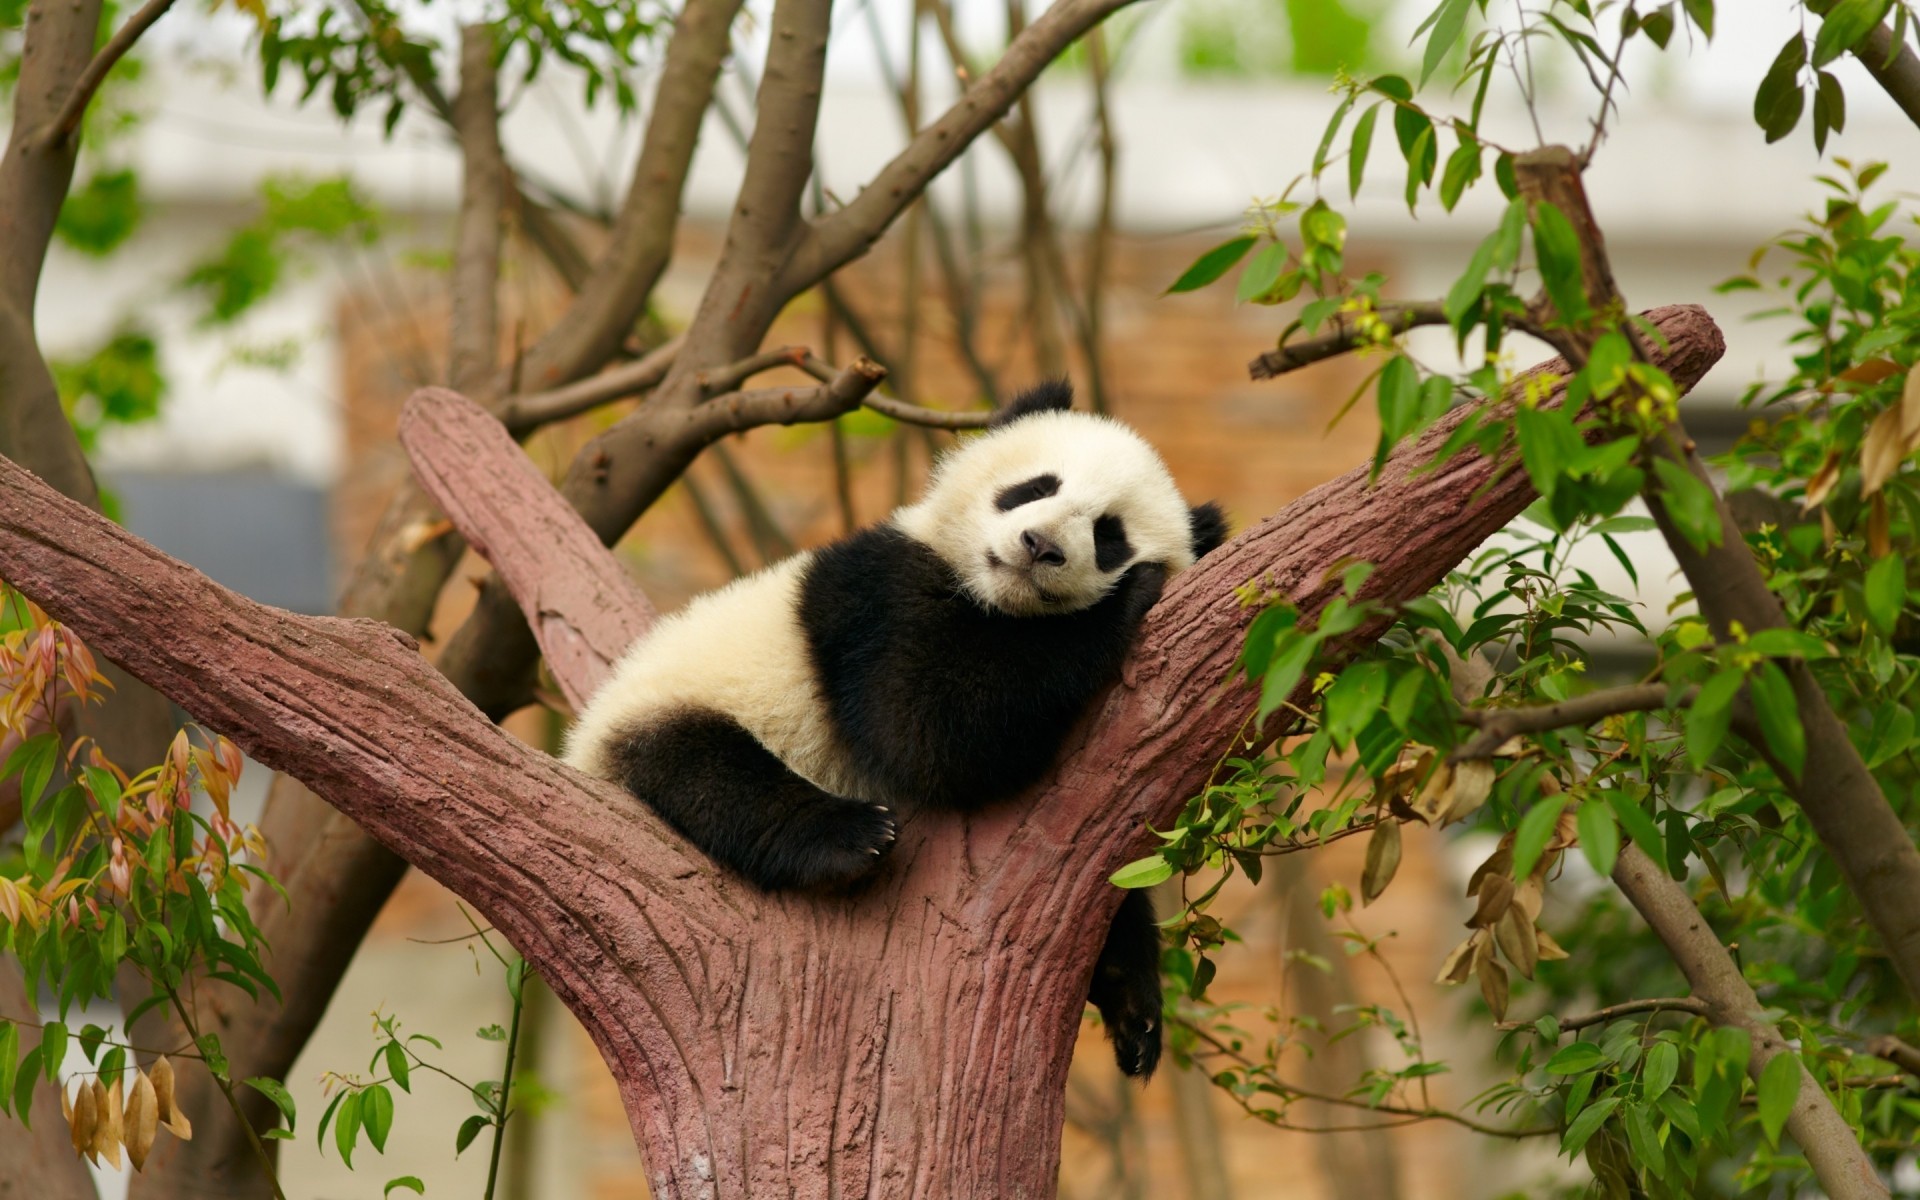 animals tree nature mammal outdoors wildlife wood leaf cute panda one zoo panda bear